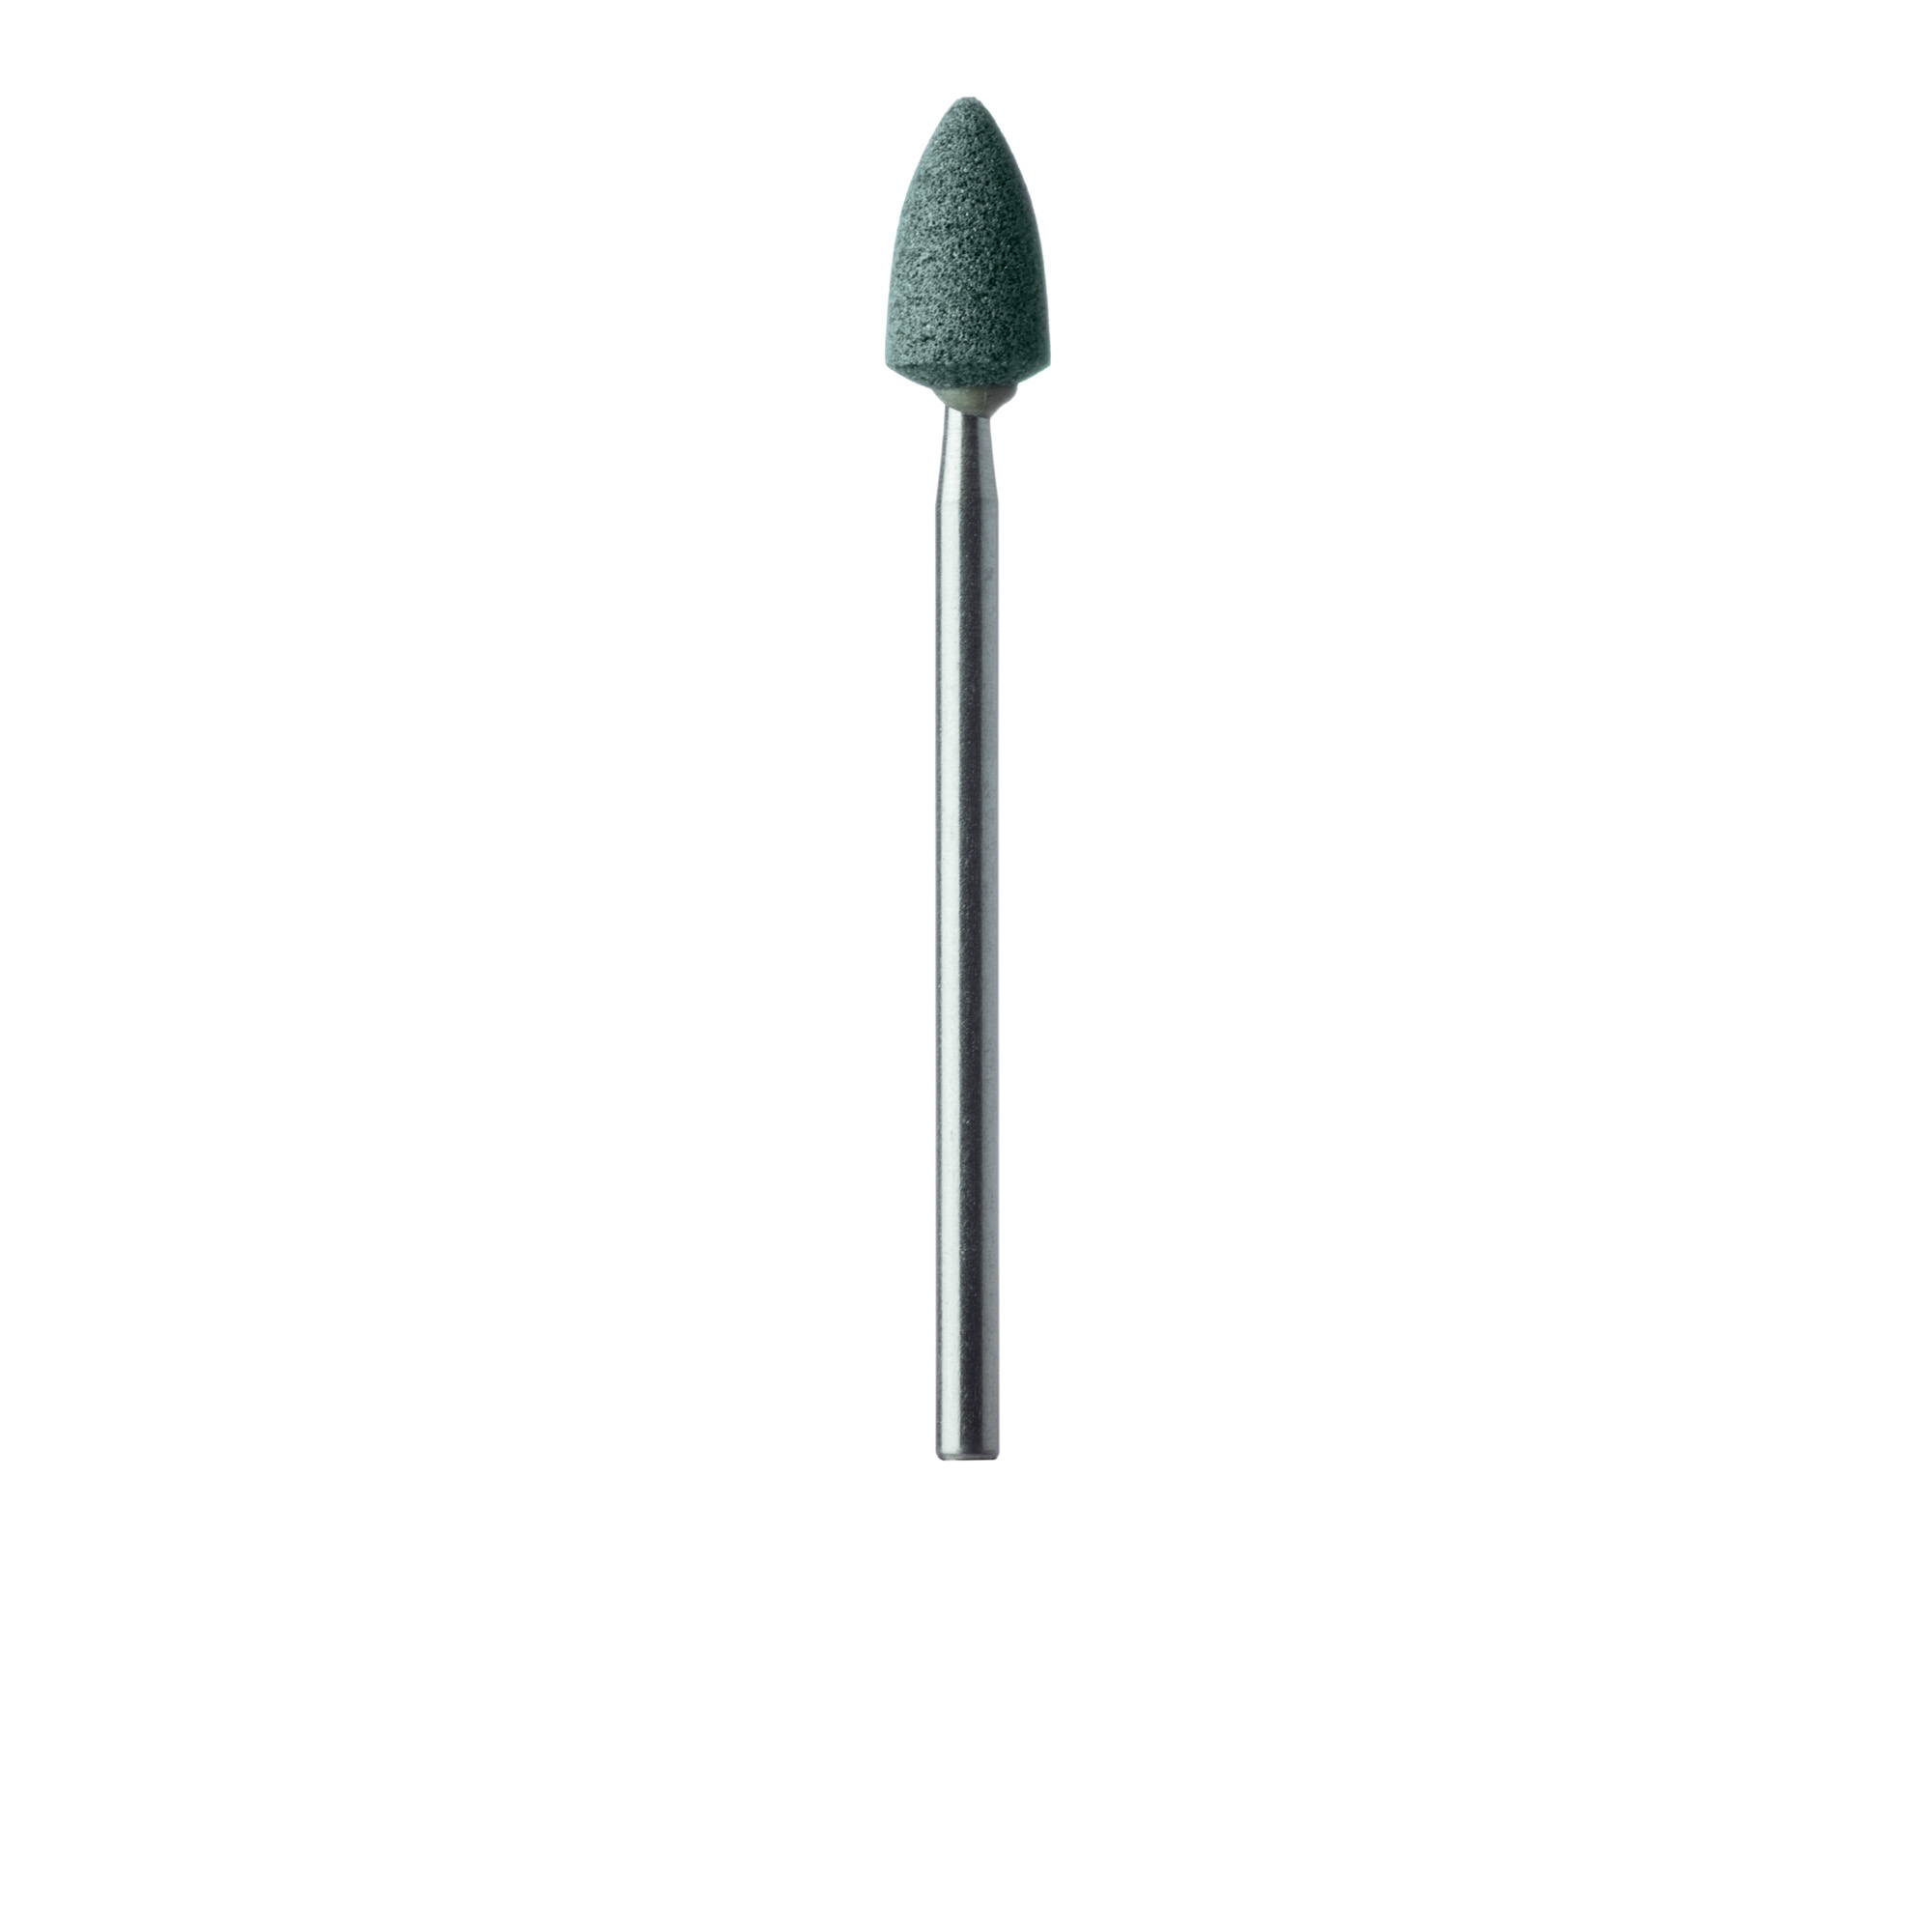 663-060-HP-GRN Abrasive, Green, Wide Flame, 6mm Ø, Medium, HP